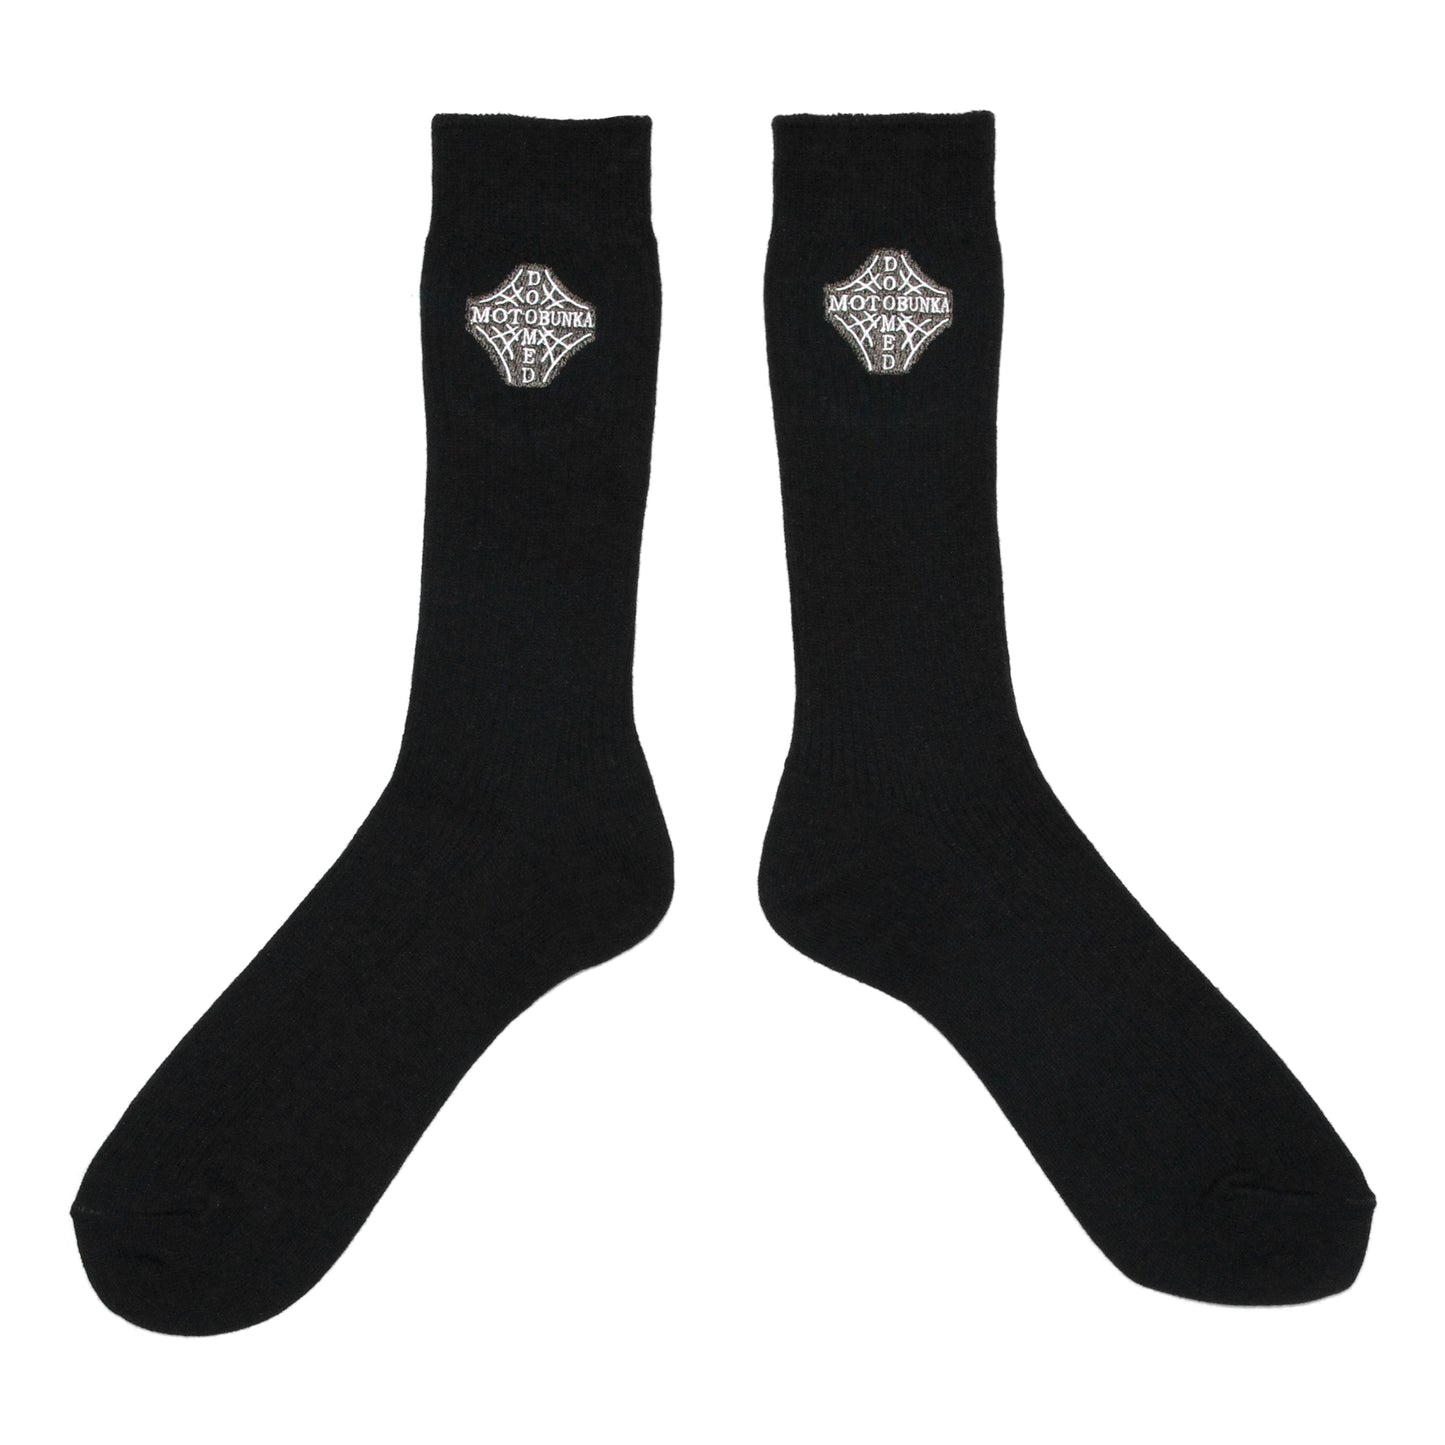 MOTO-BUNKA X DOOMED - Web Cross Socks